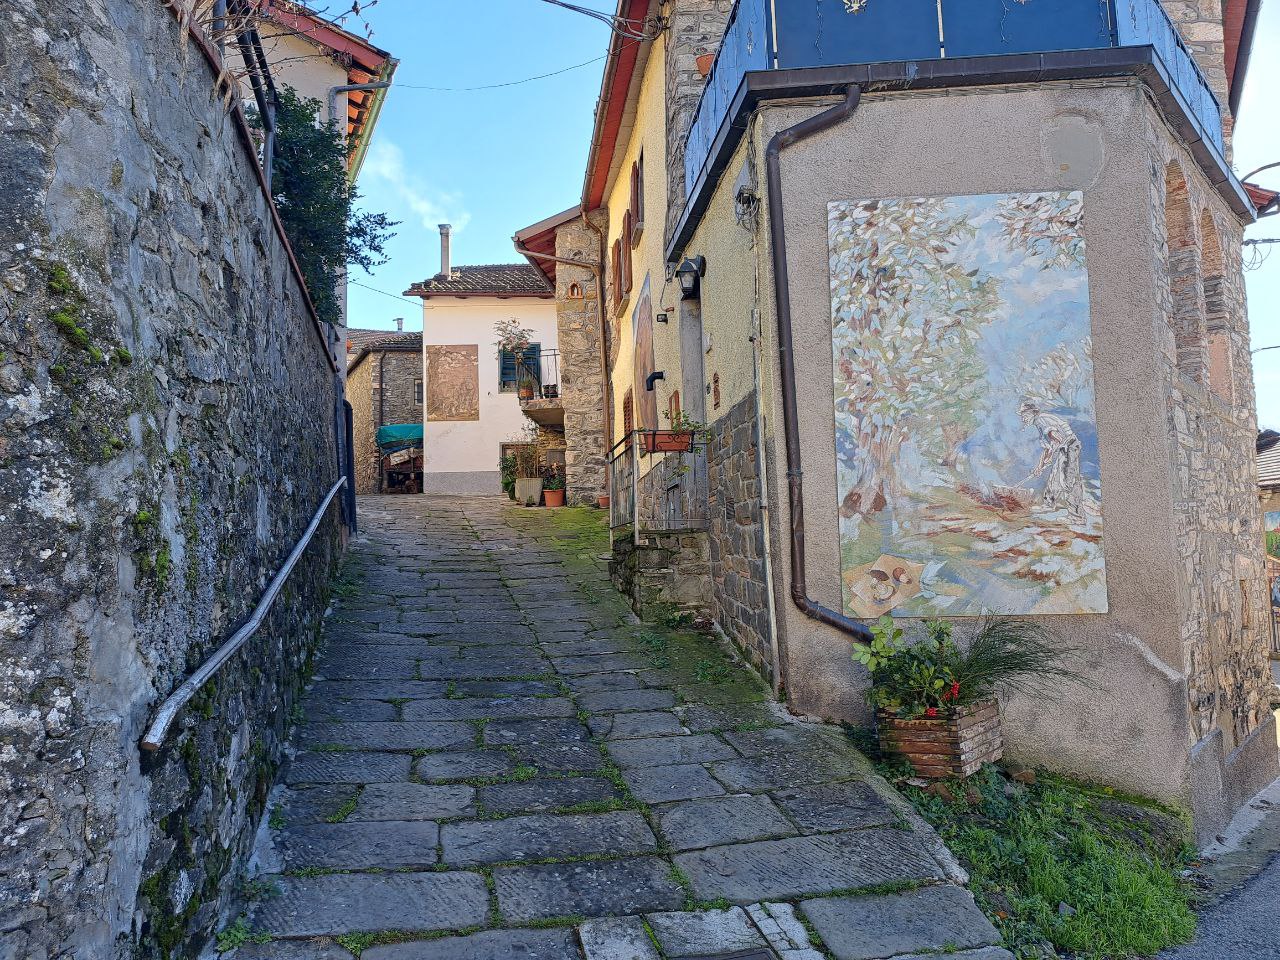 In the alleys of Lizzano Pistoiese, the village of graffiti